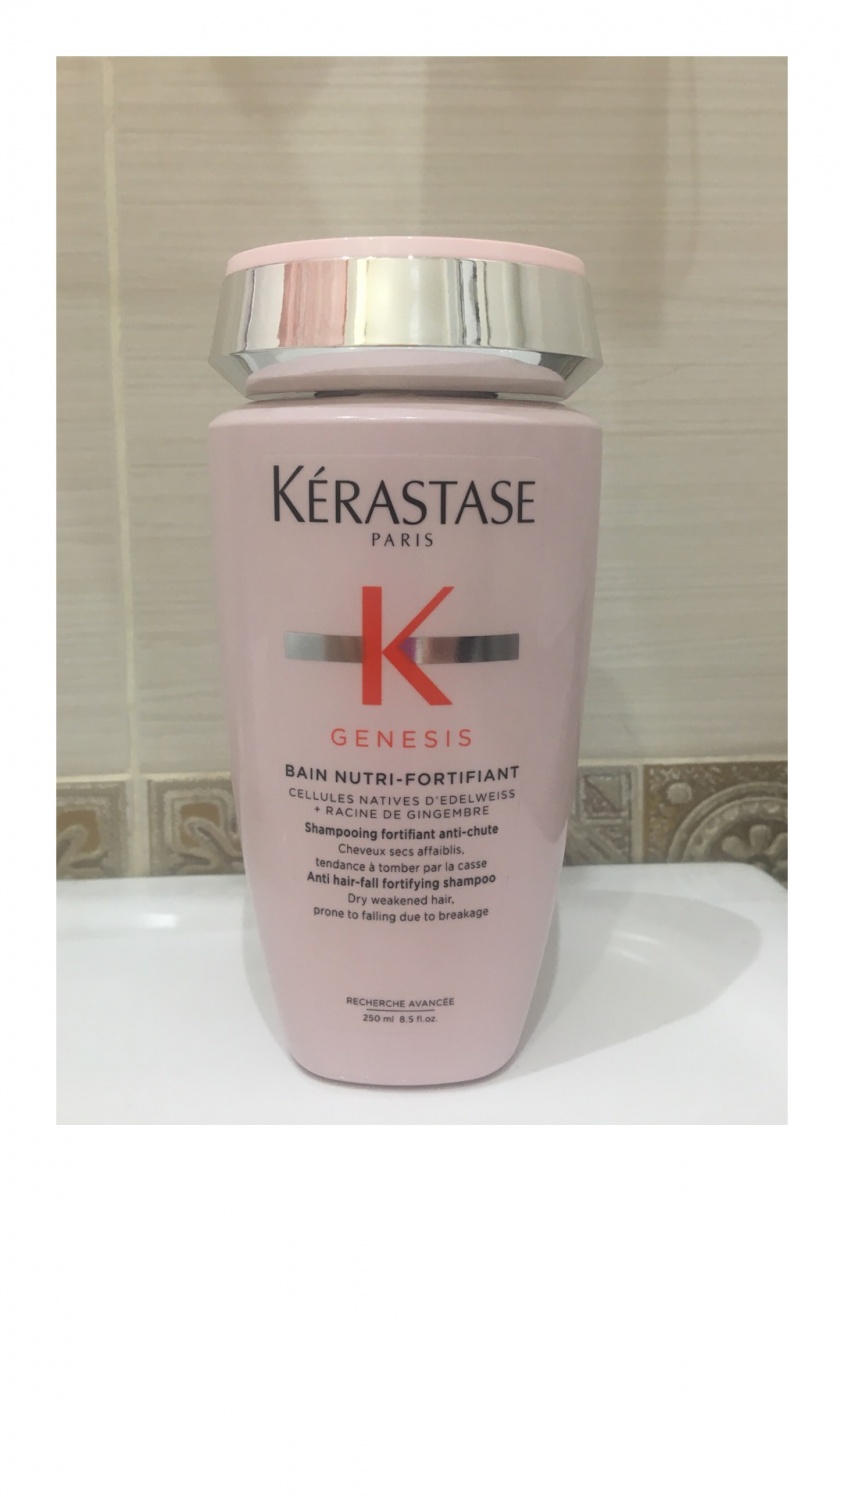 Kerastase genesis bain hydra fortifiant отзывы действия спайса видео